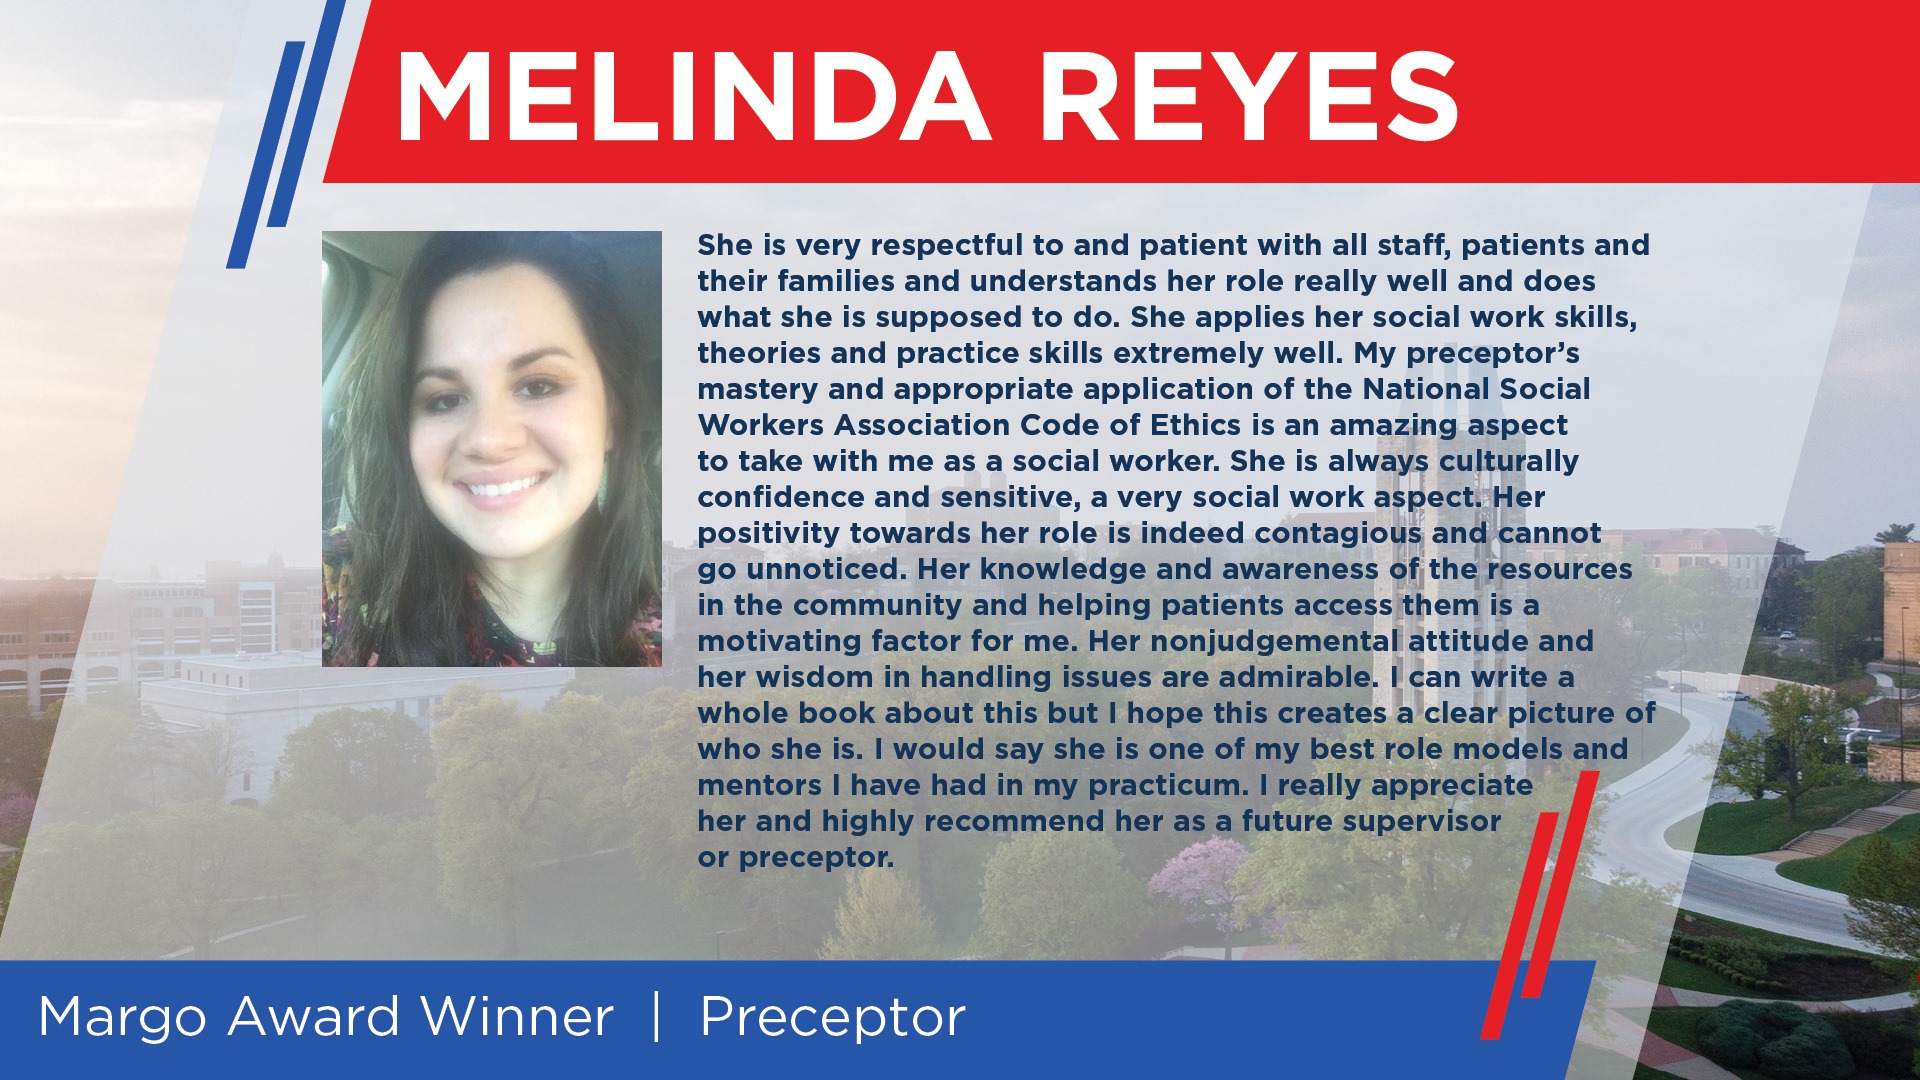 Preceptor Margo Award Winner - Melinda Reyes